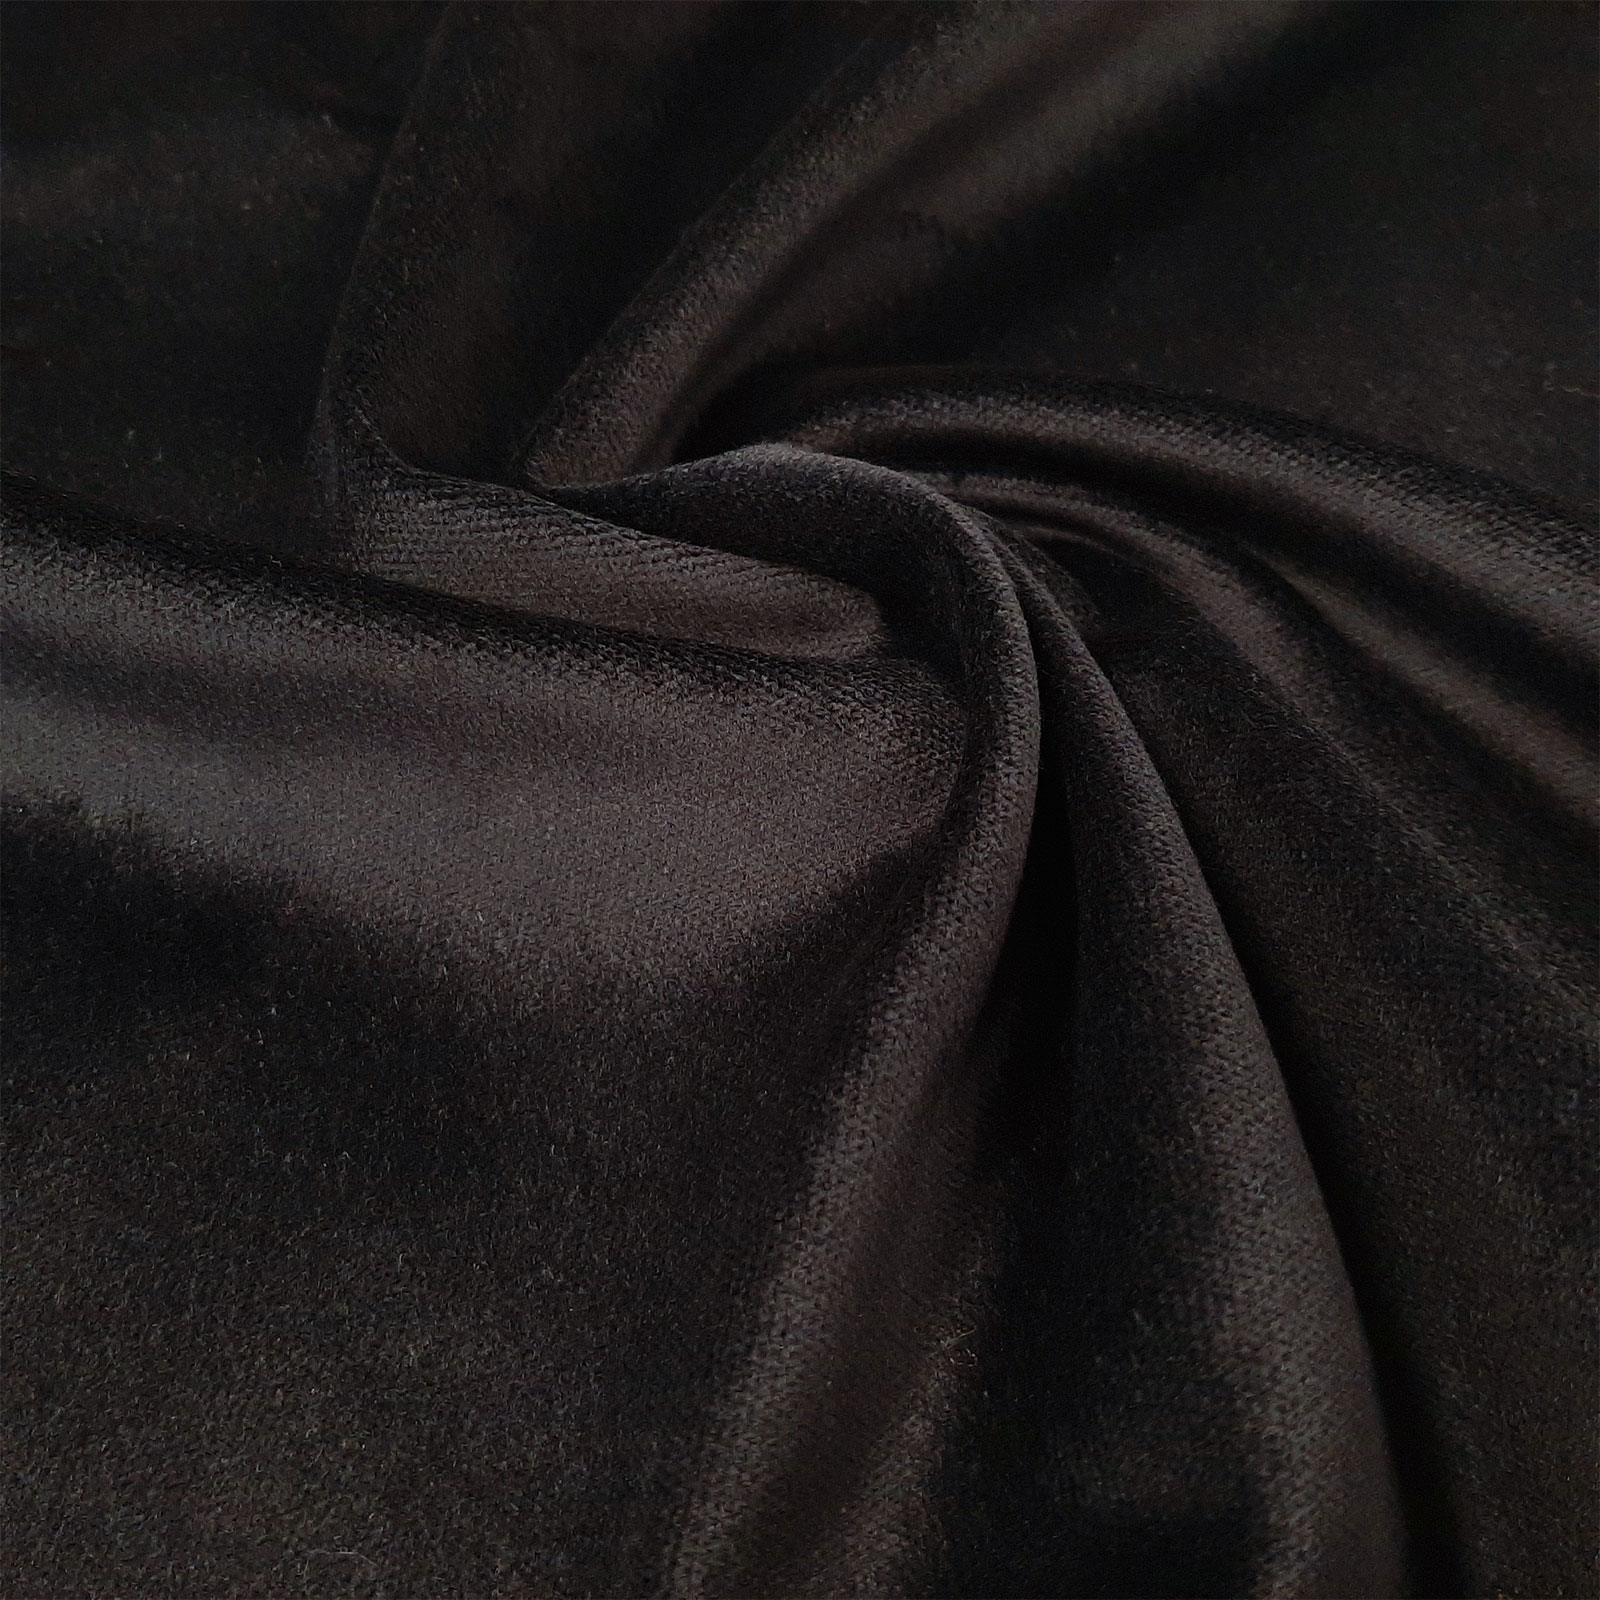 Franz - Terciopelo de confección / terciopelo de algodón - negro